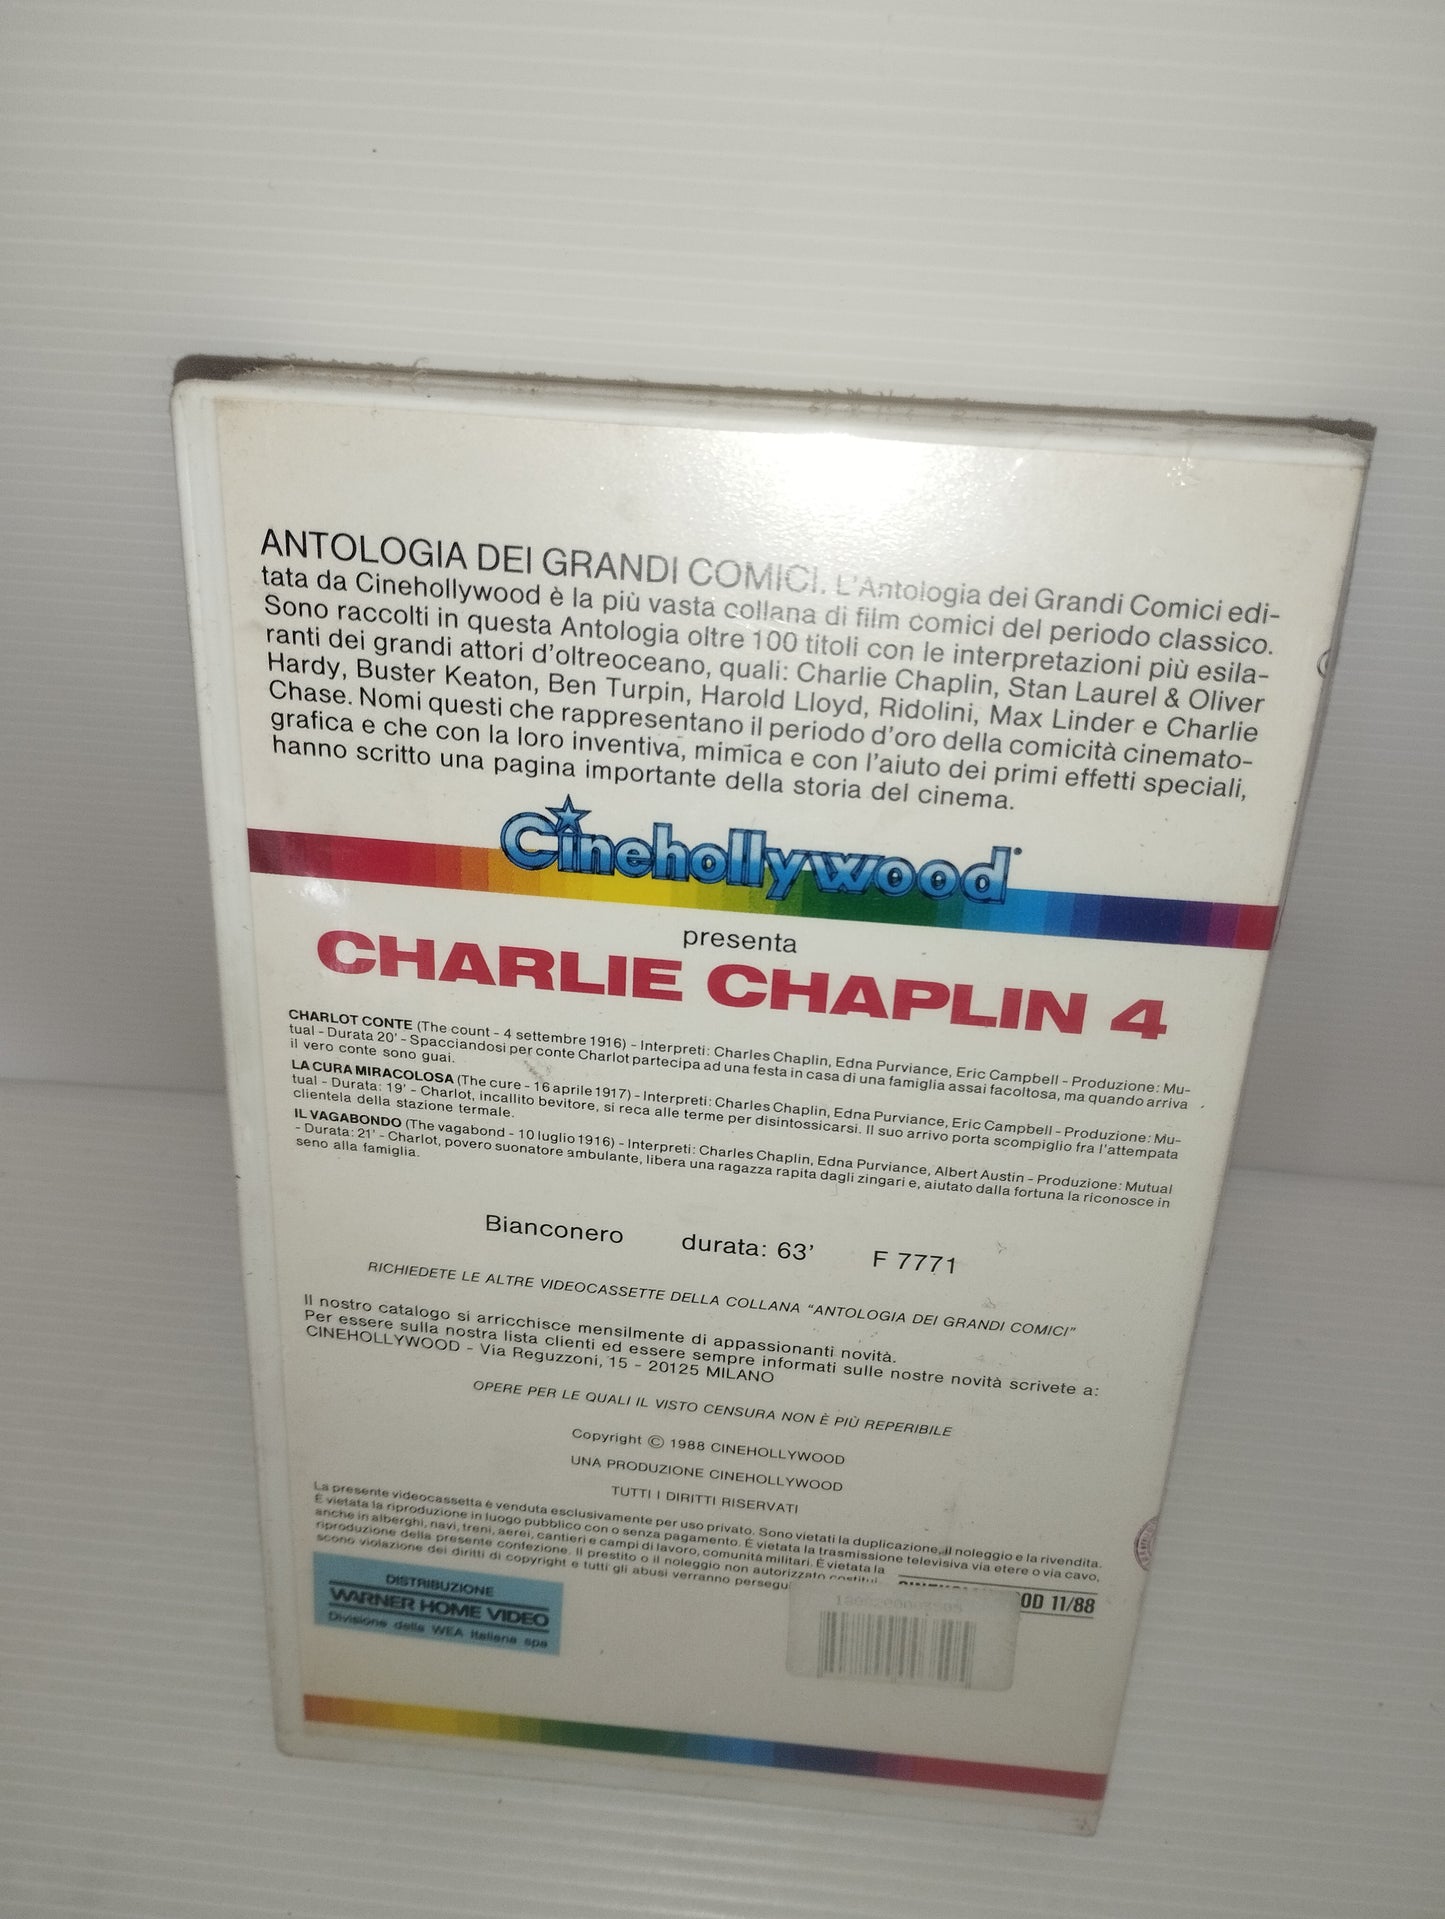 VHS Charlie Chaplin Cinehollywood

Serie Antologia dei Grandi Comici

Cinehollywood